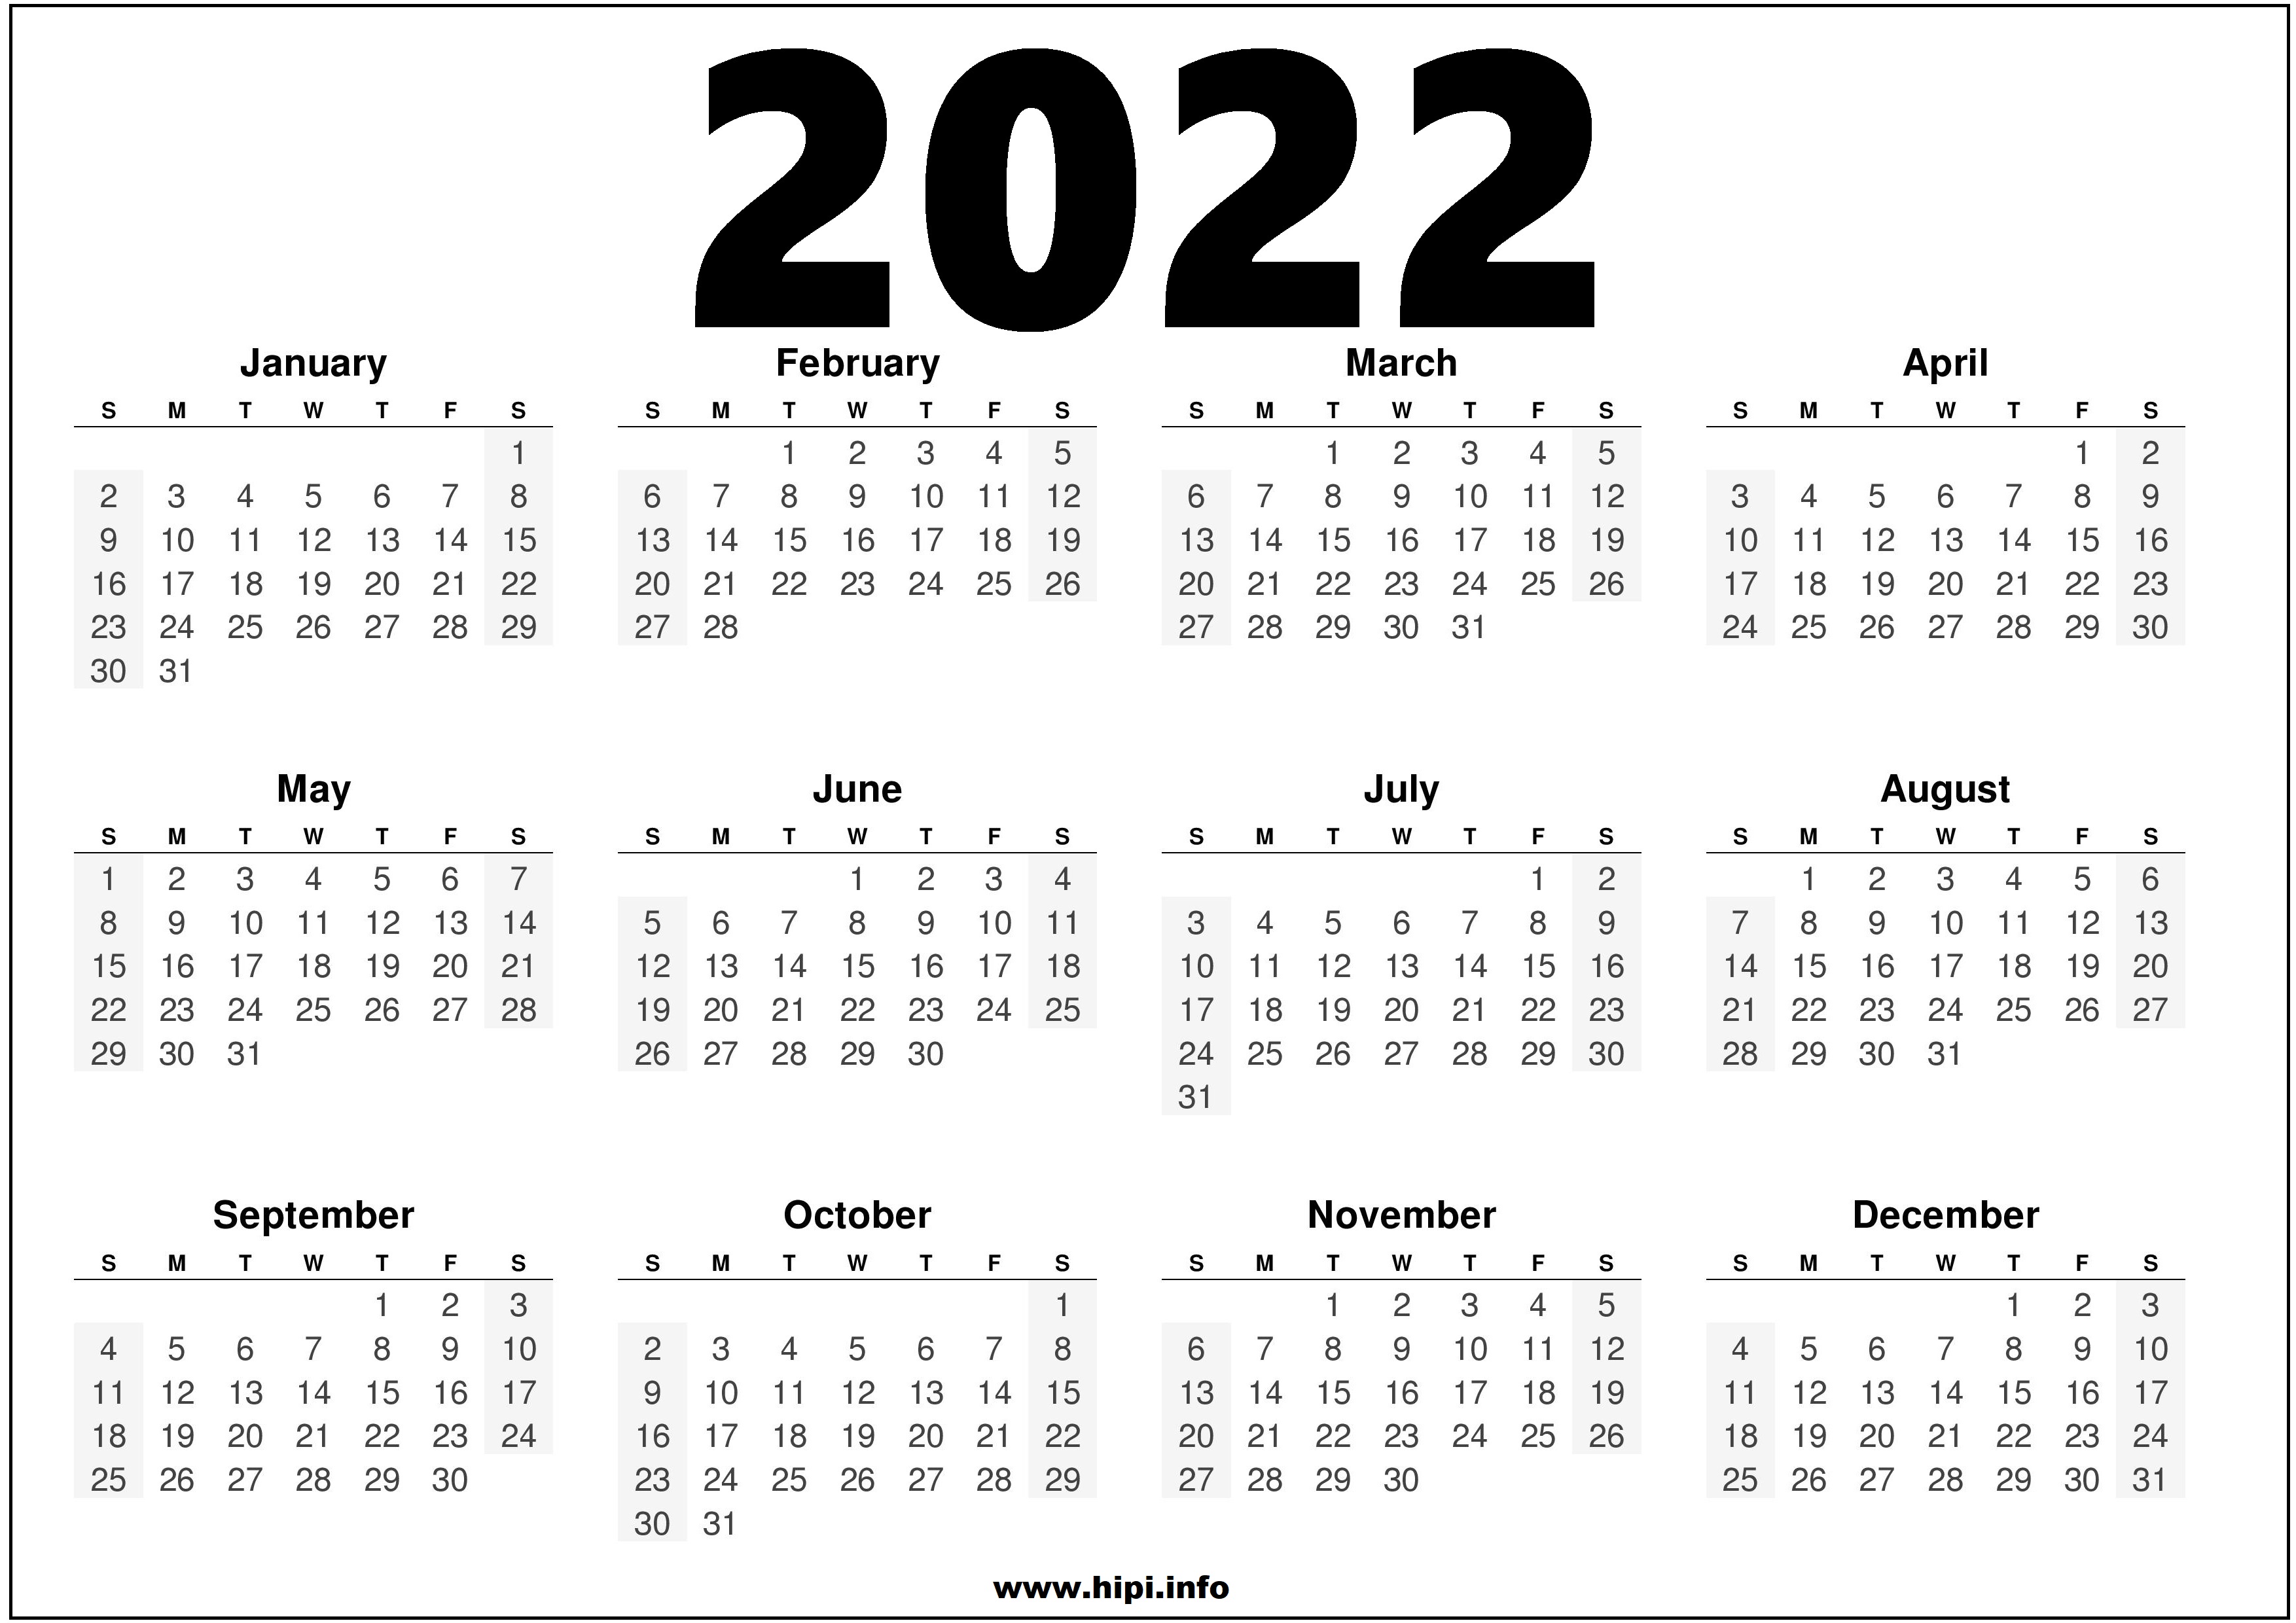 Free Download 2022 Calendar 2022 Printable Calendar Us Free Download - Hipi.info | Calendars Printable  Free